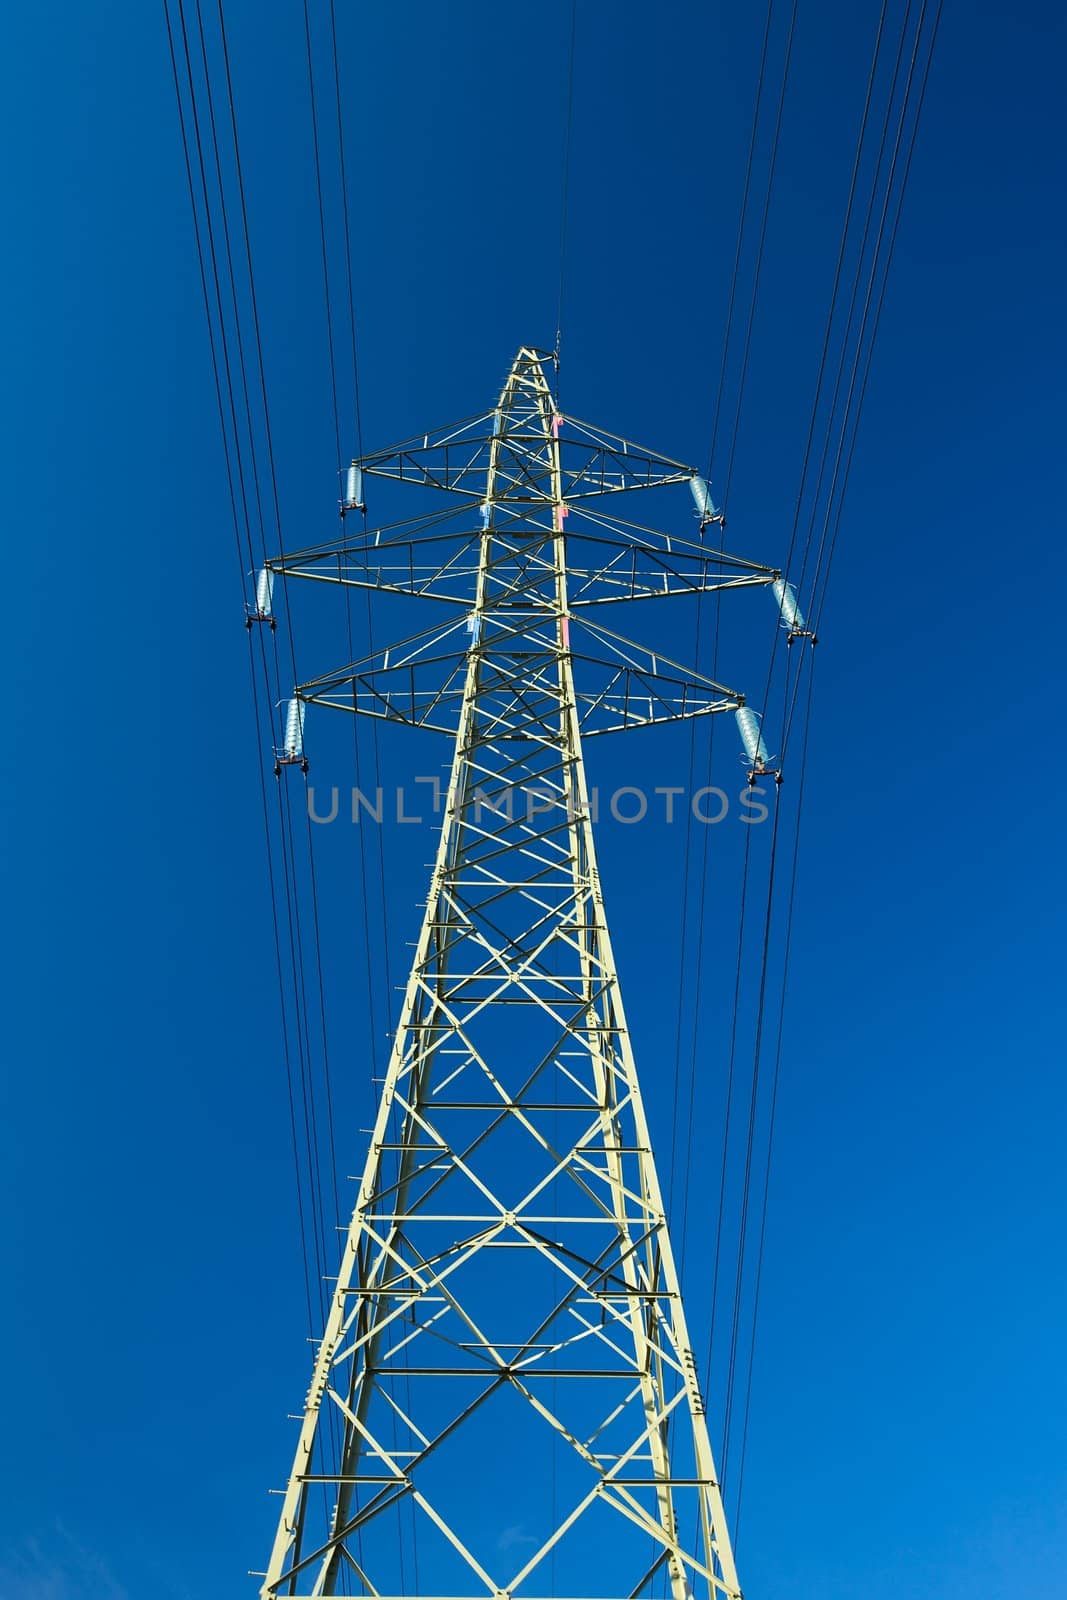 High voltage electric line against blue sky